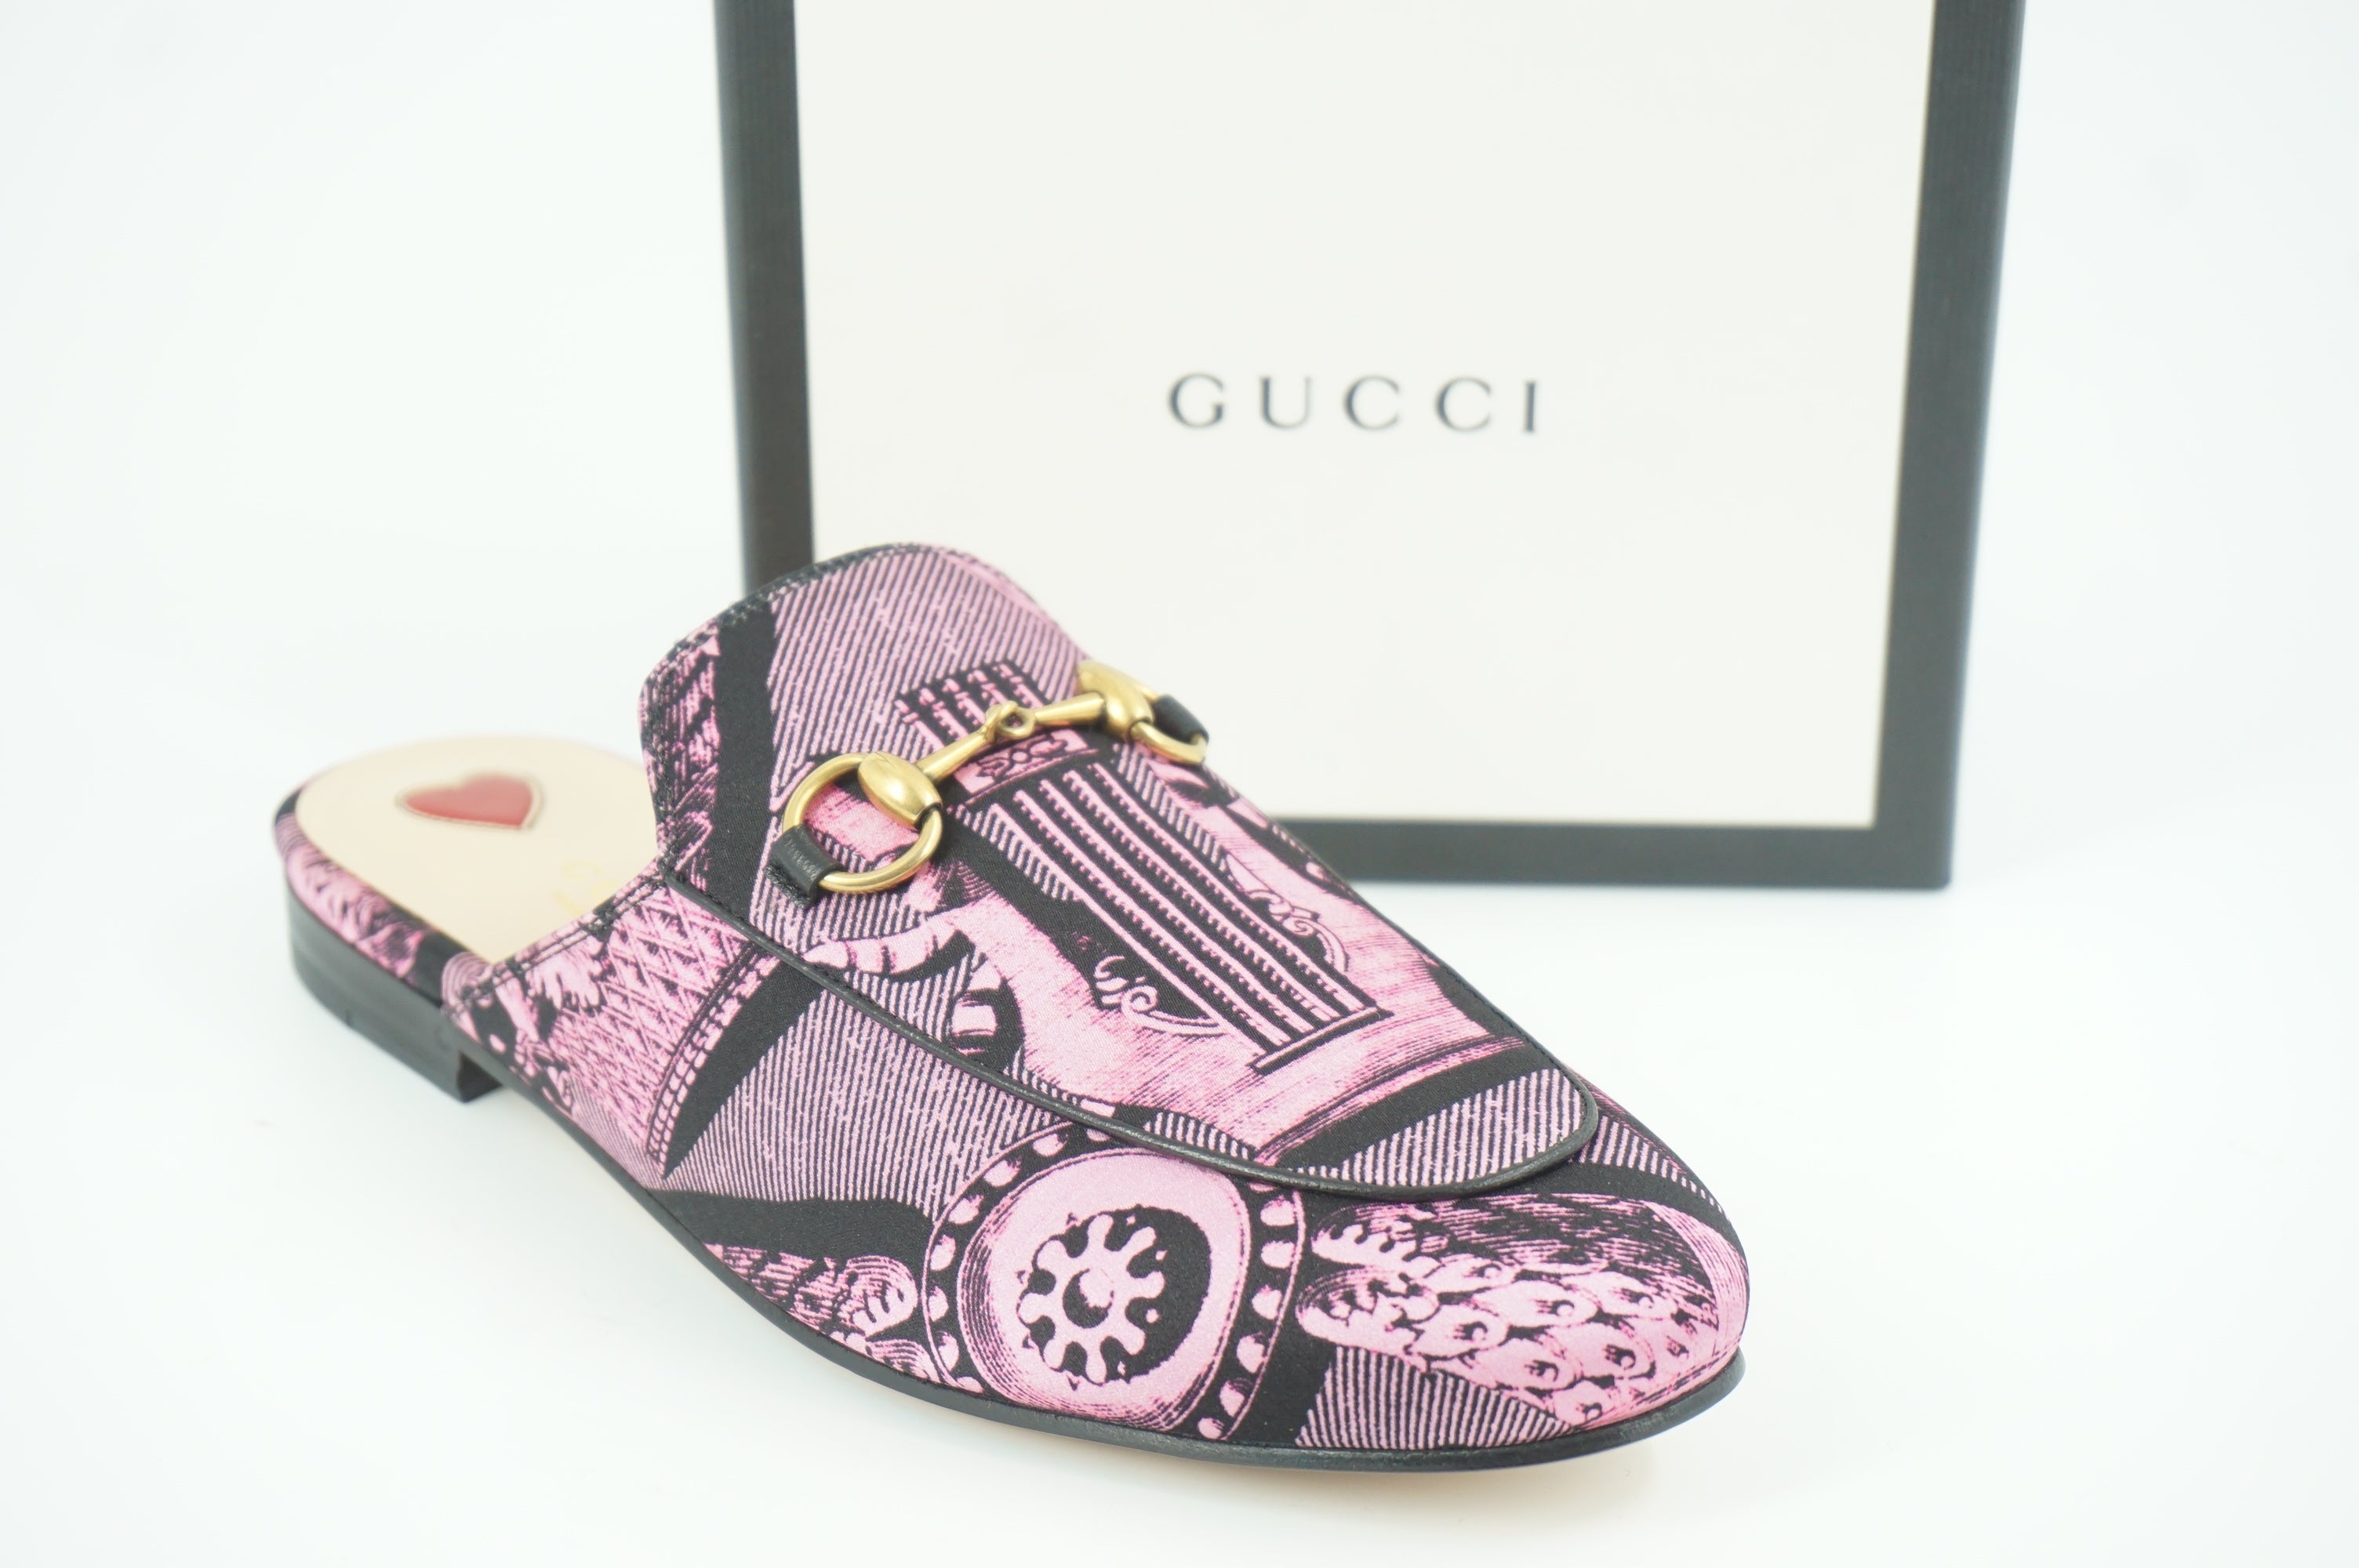 Gucci Princetown St Romain Satin Loafer Mule Size 36 Horse Bit NIB $795 Pink